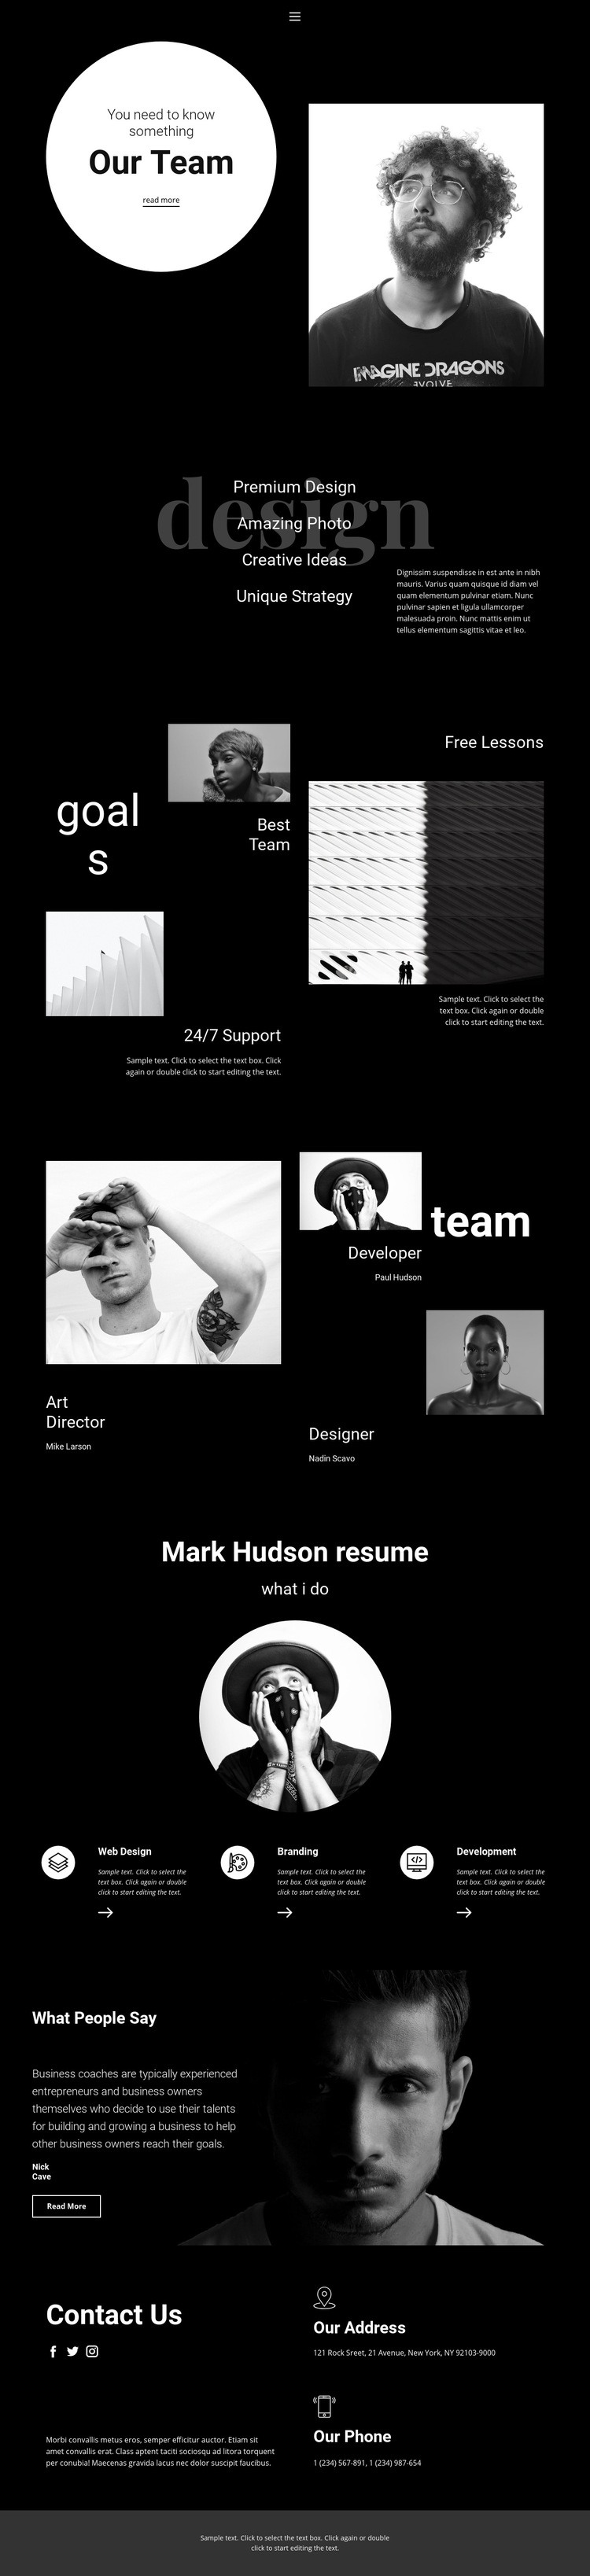 Design and development team Web Page Design